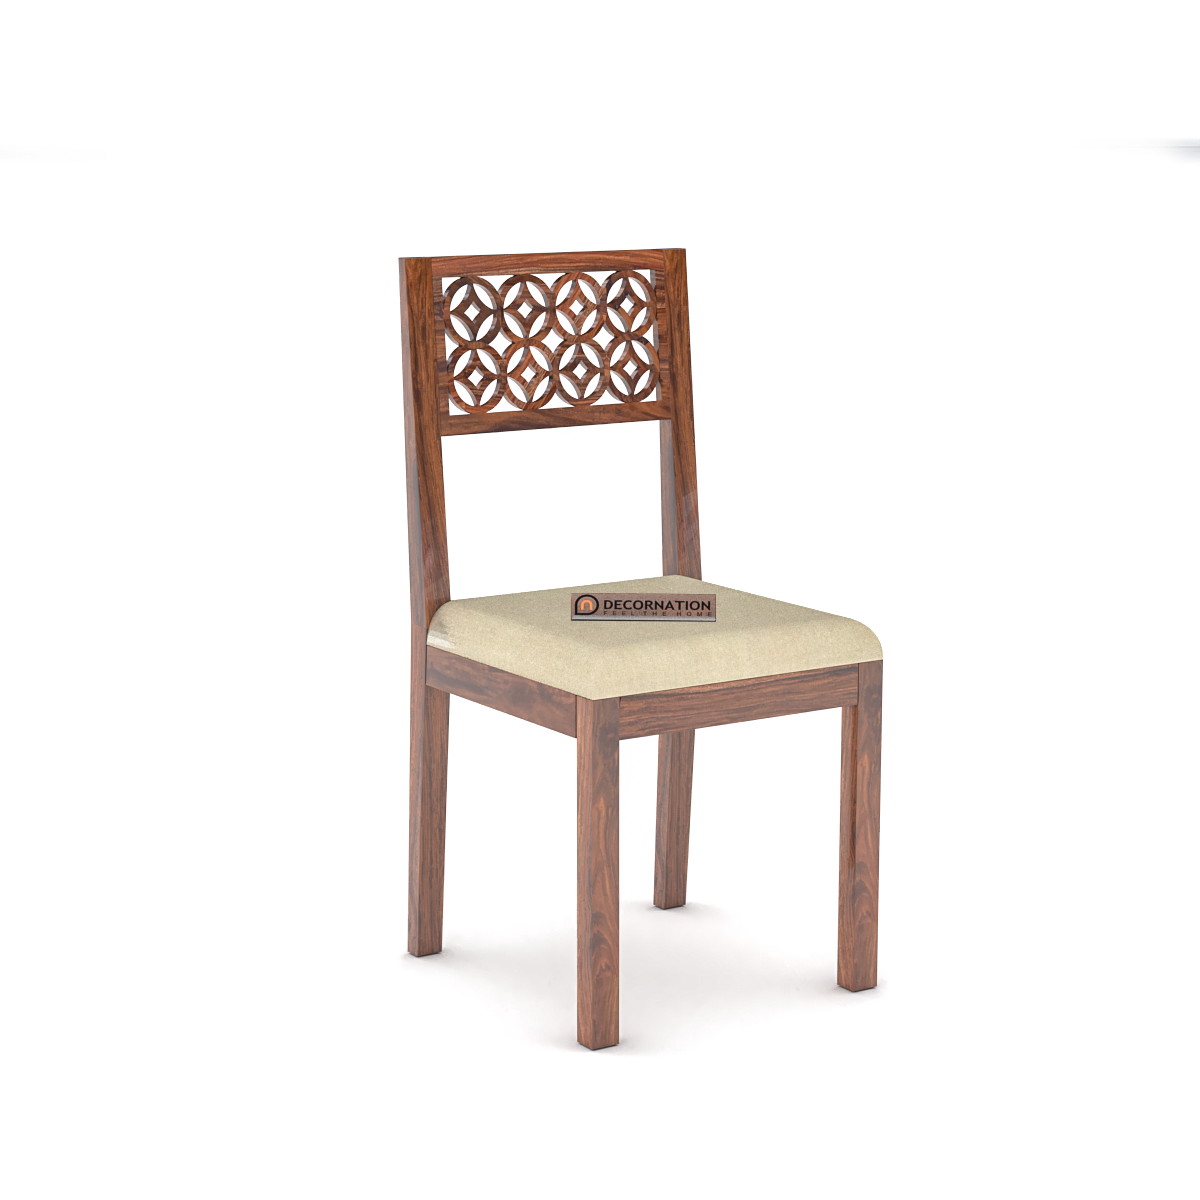 Beringen Wooden Dining Table Chair – Brown